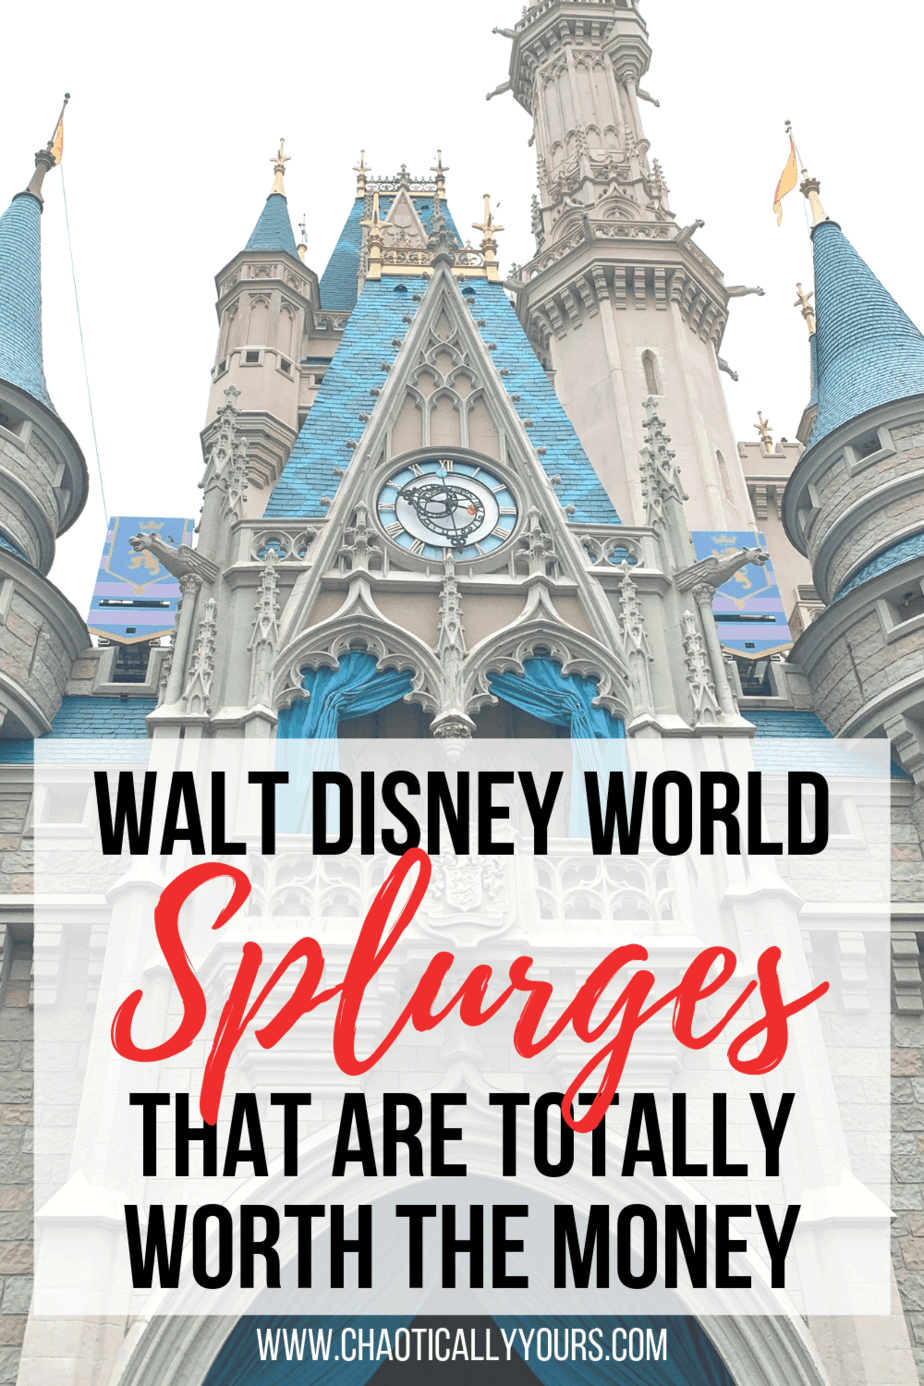 Walt Disney World Splurges That Are Worth The Extra Money